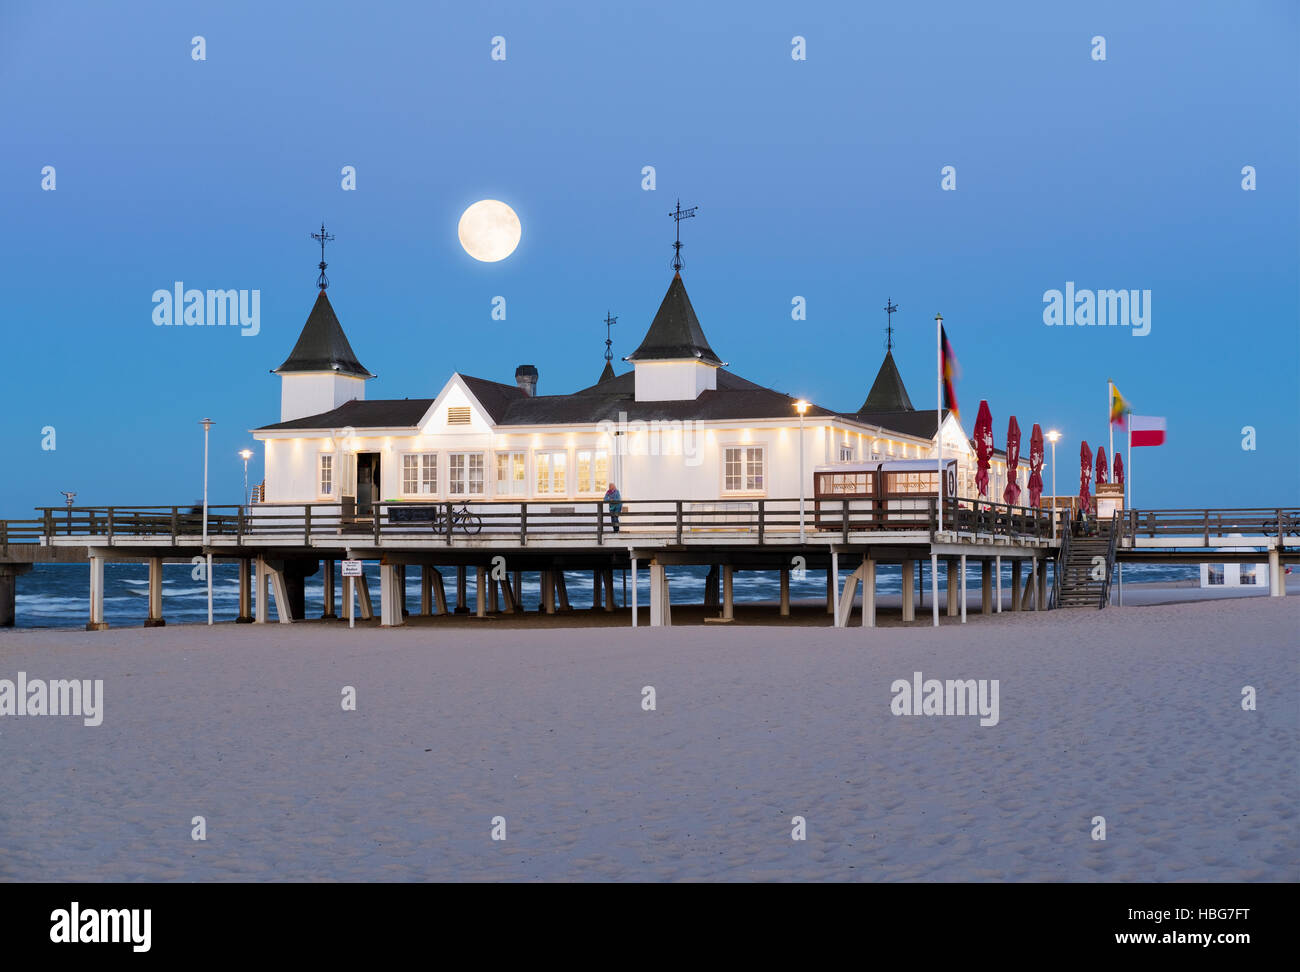 Ahlbeck seaside resort pier at dusk, full moon, Ahlbeck, Heringsdorf, Usedom, Baltic Sea, Mecklenburg-Western Pomerania, Germany Stock Photo